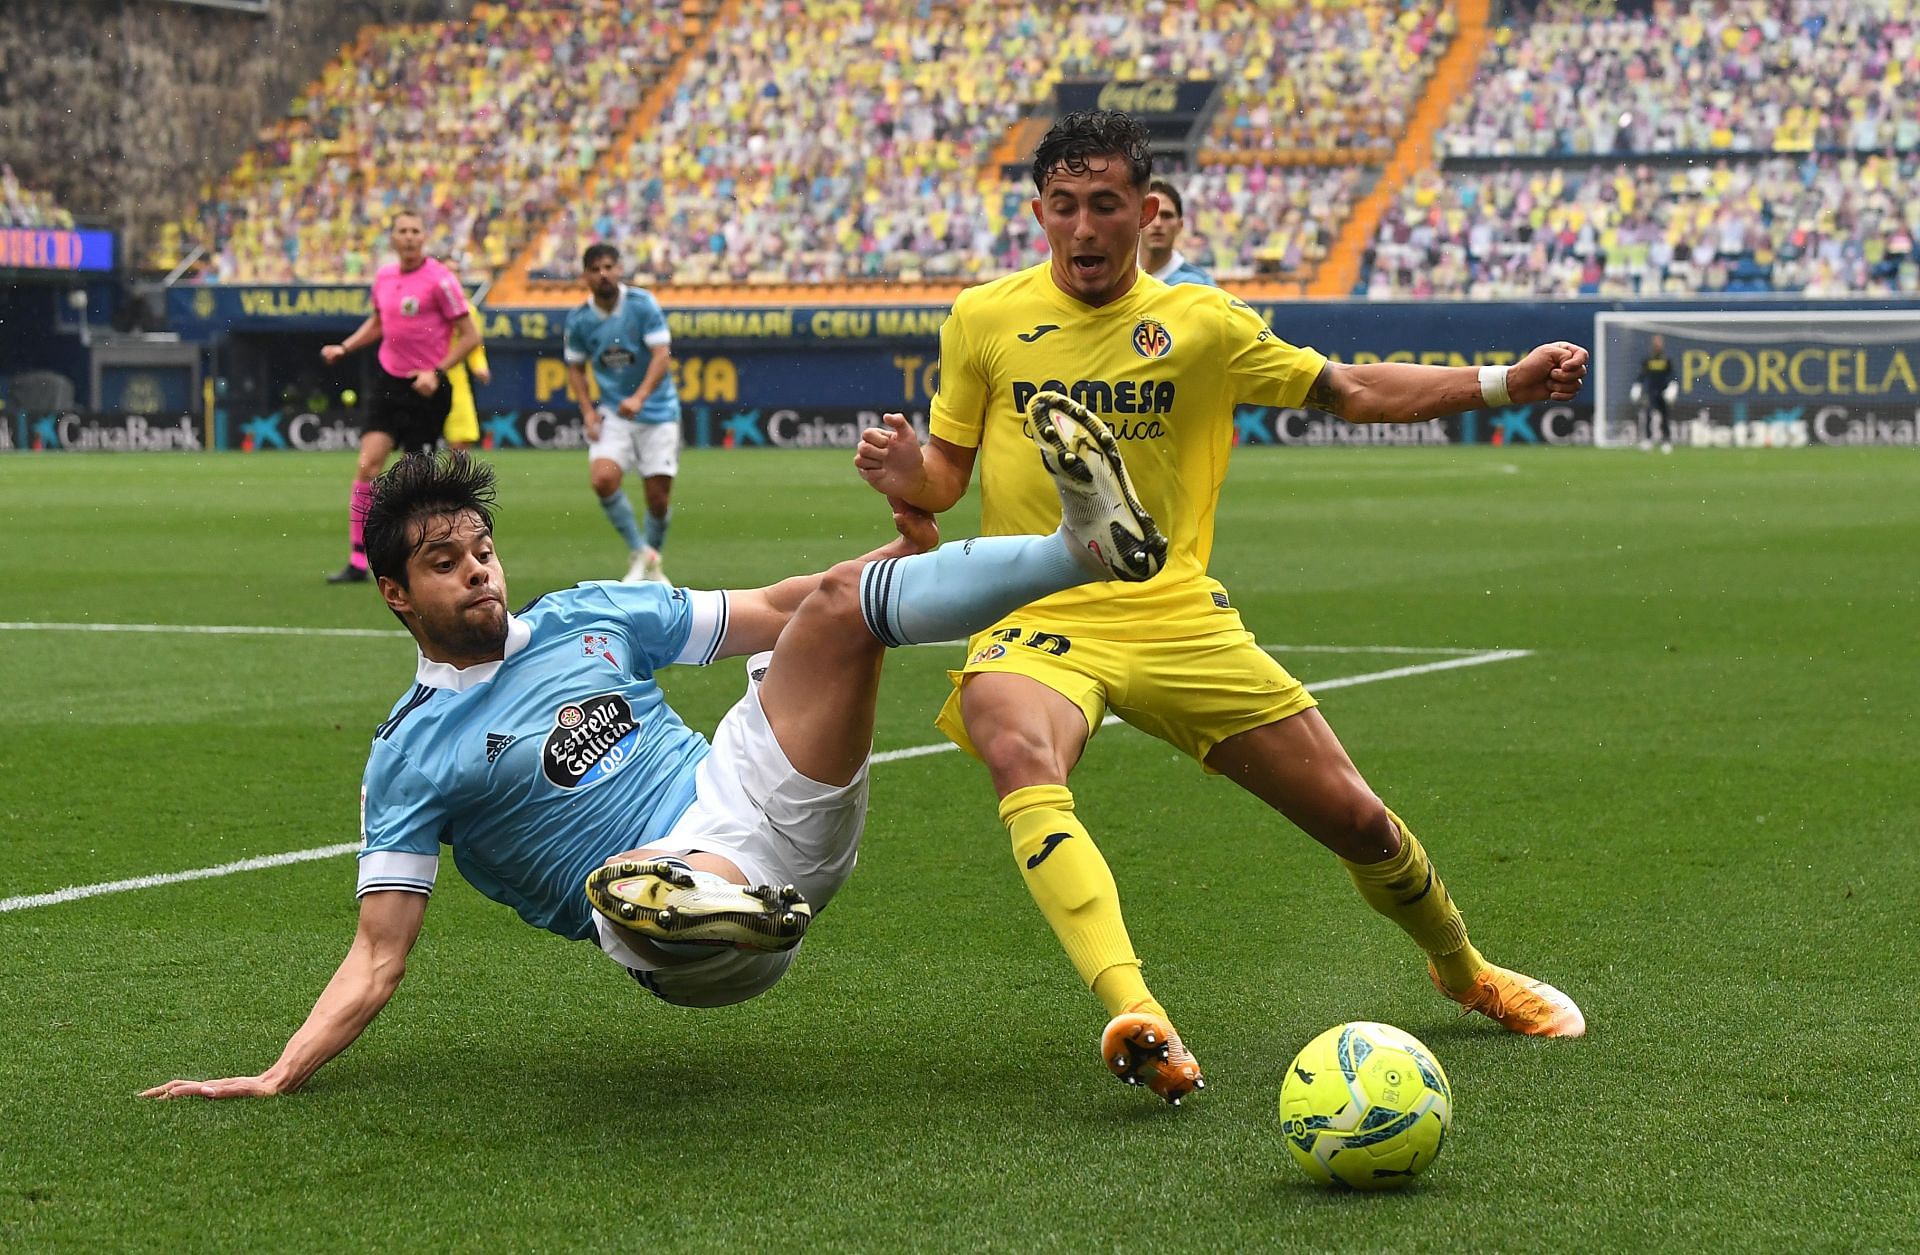 Villarreal take on Celta Vigo this weekend